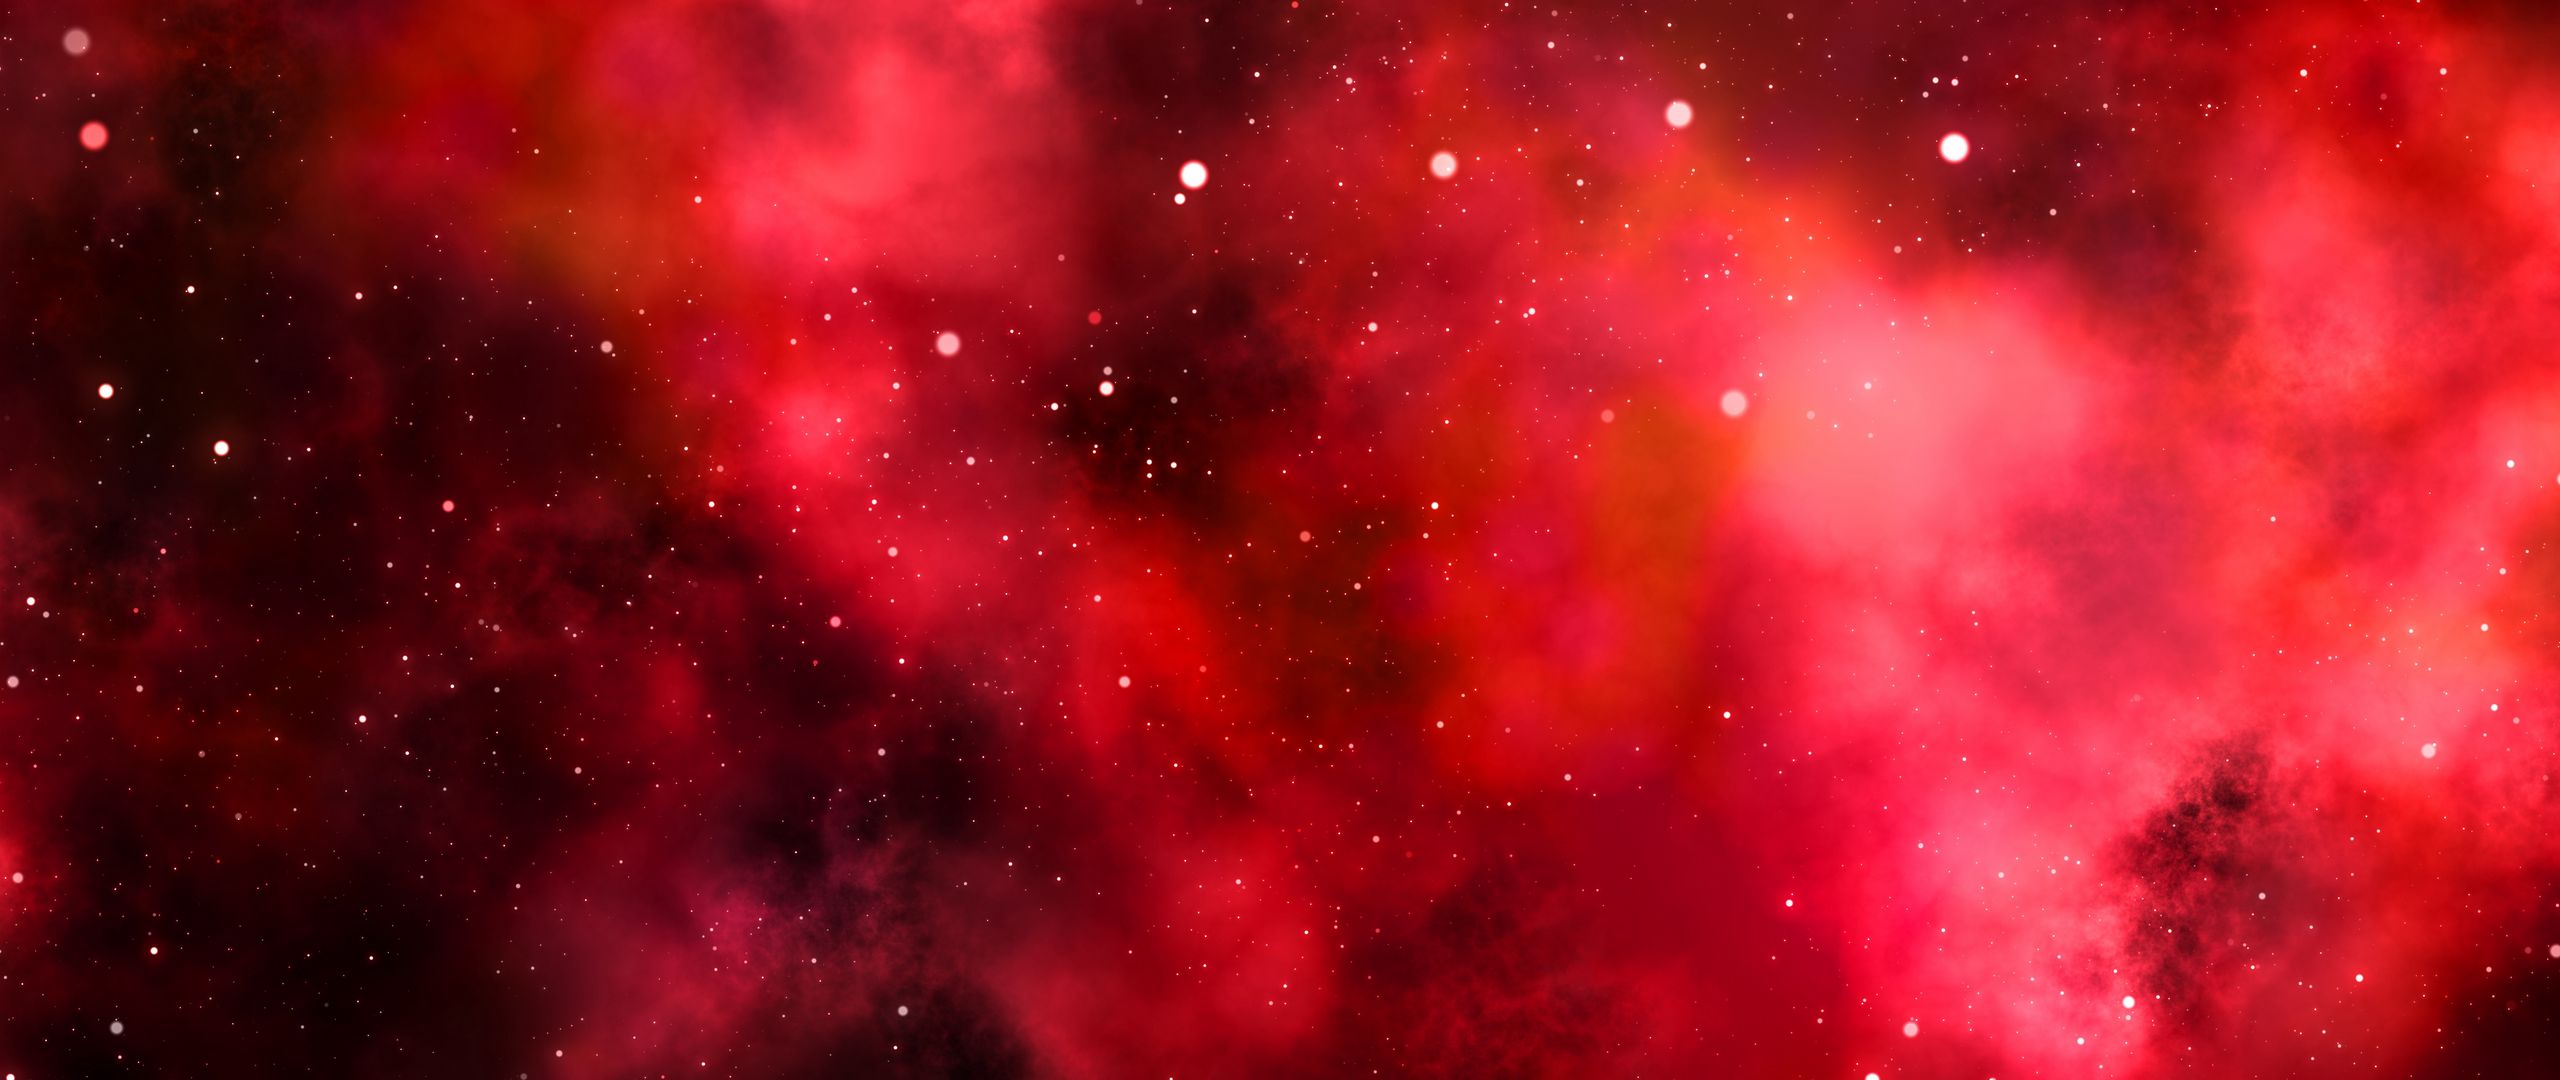 galaxy s7 wallpaper hd 1080p,nebula,red,astronomical object,pink,sky